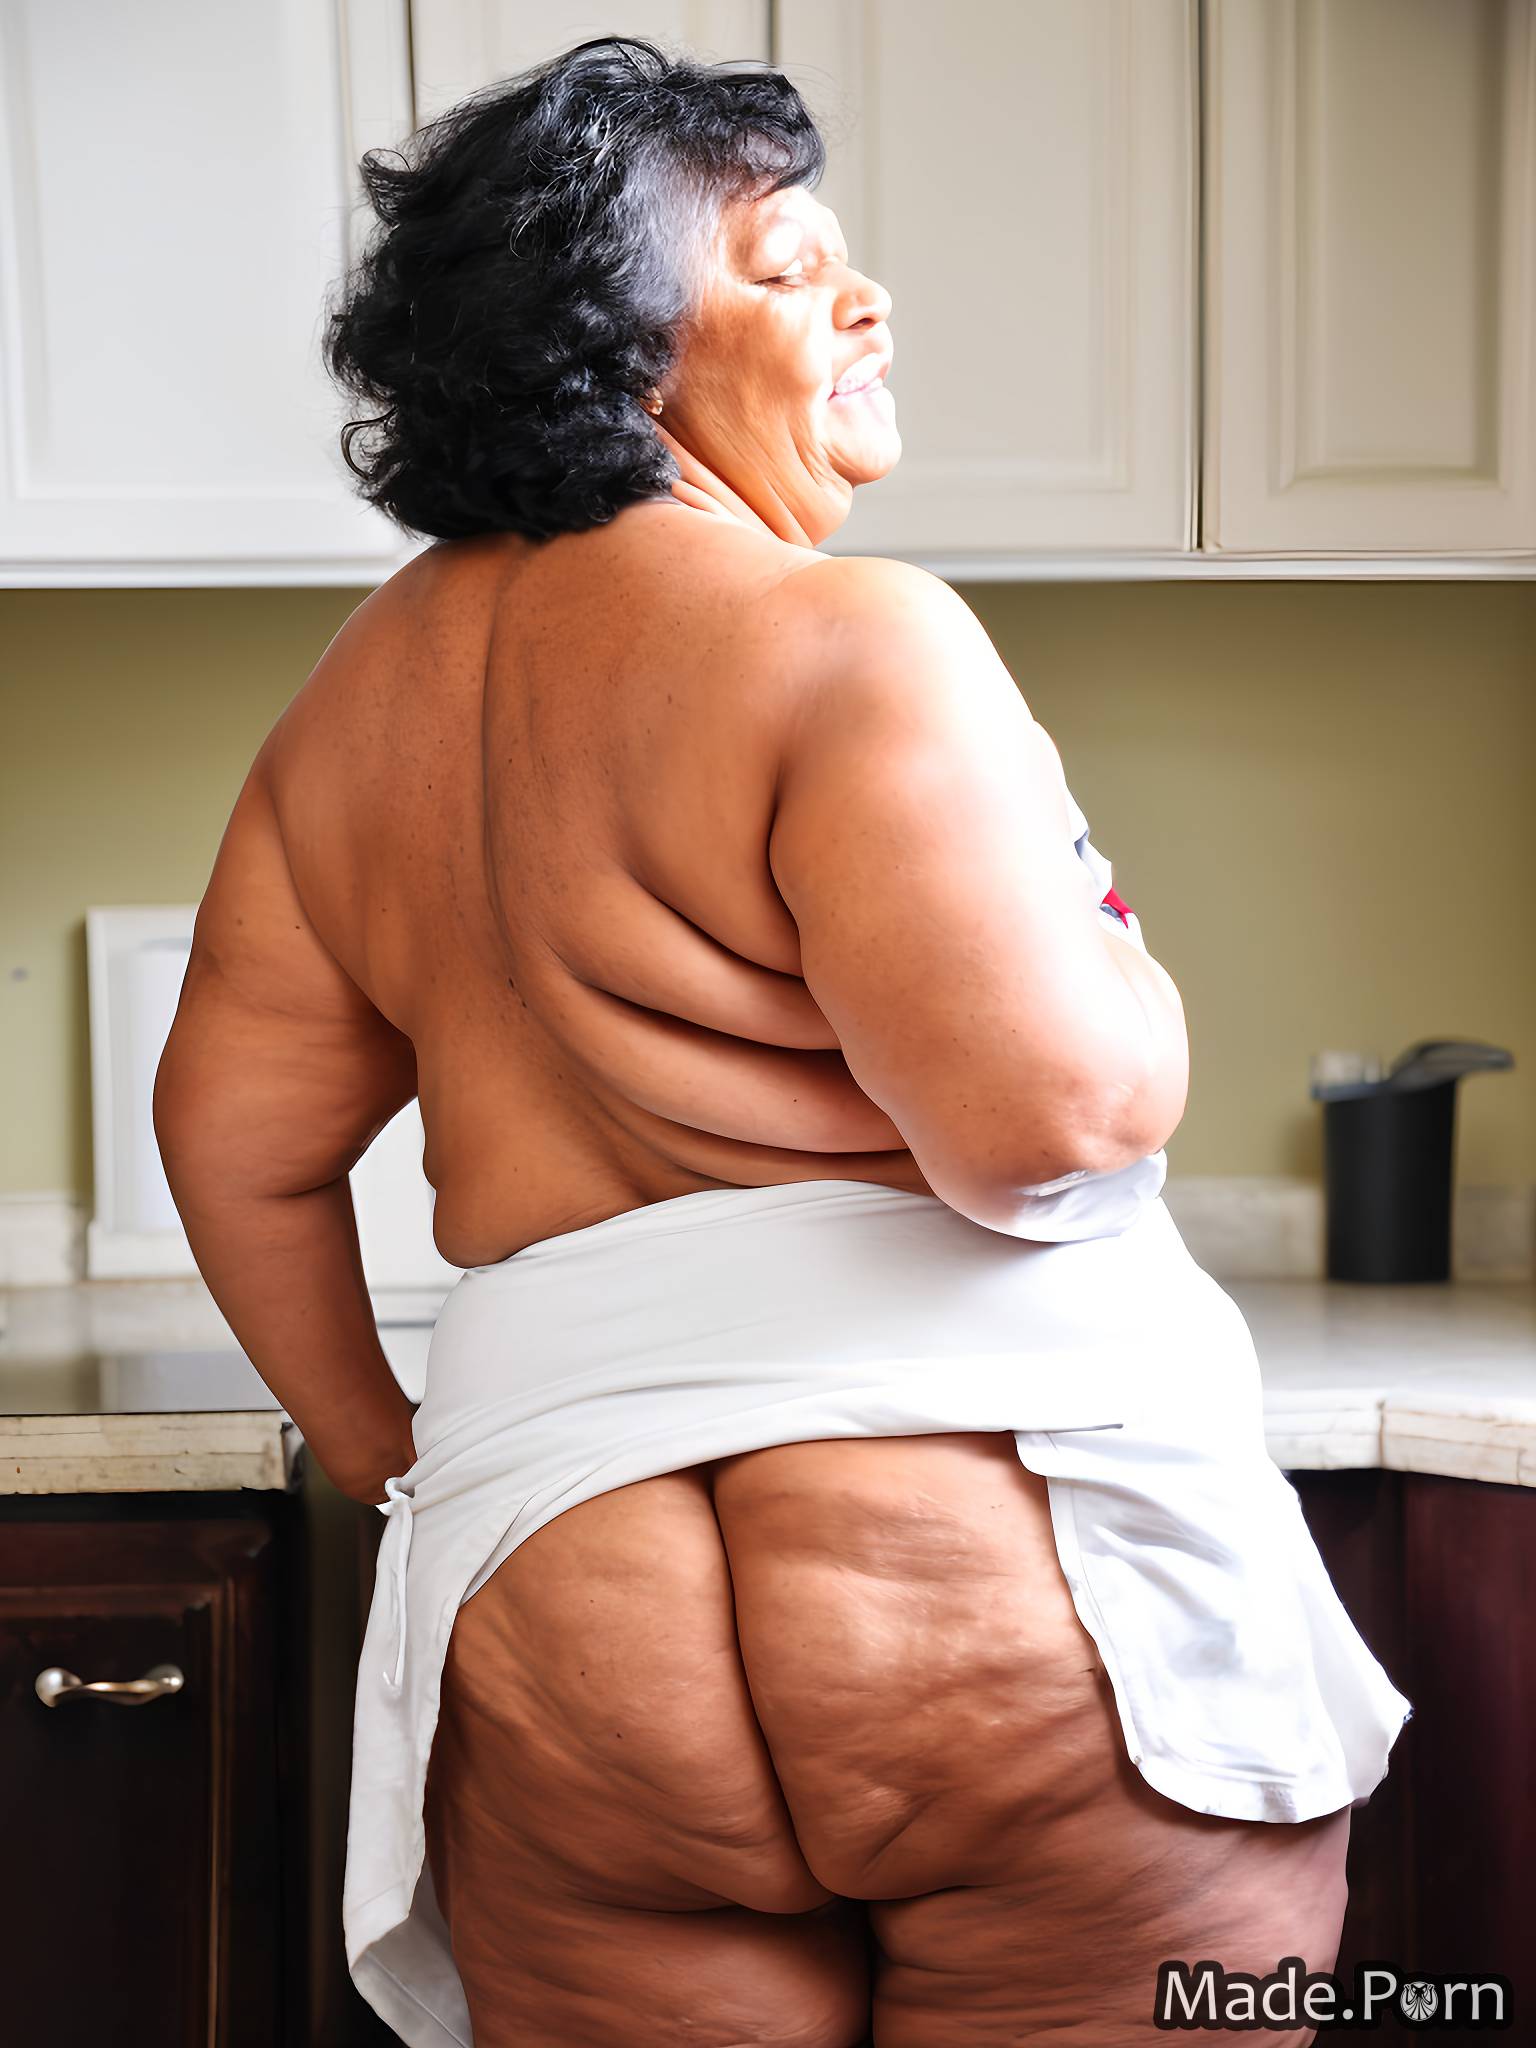 woman seductive british looking at viewer nude thick thighs maid